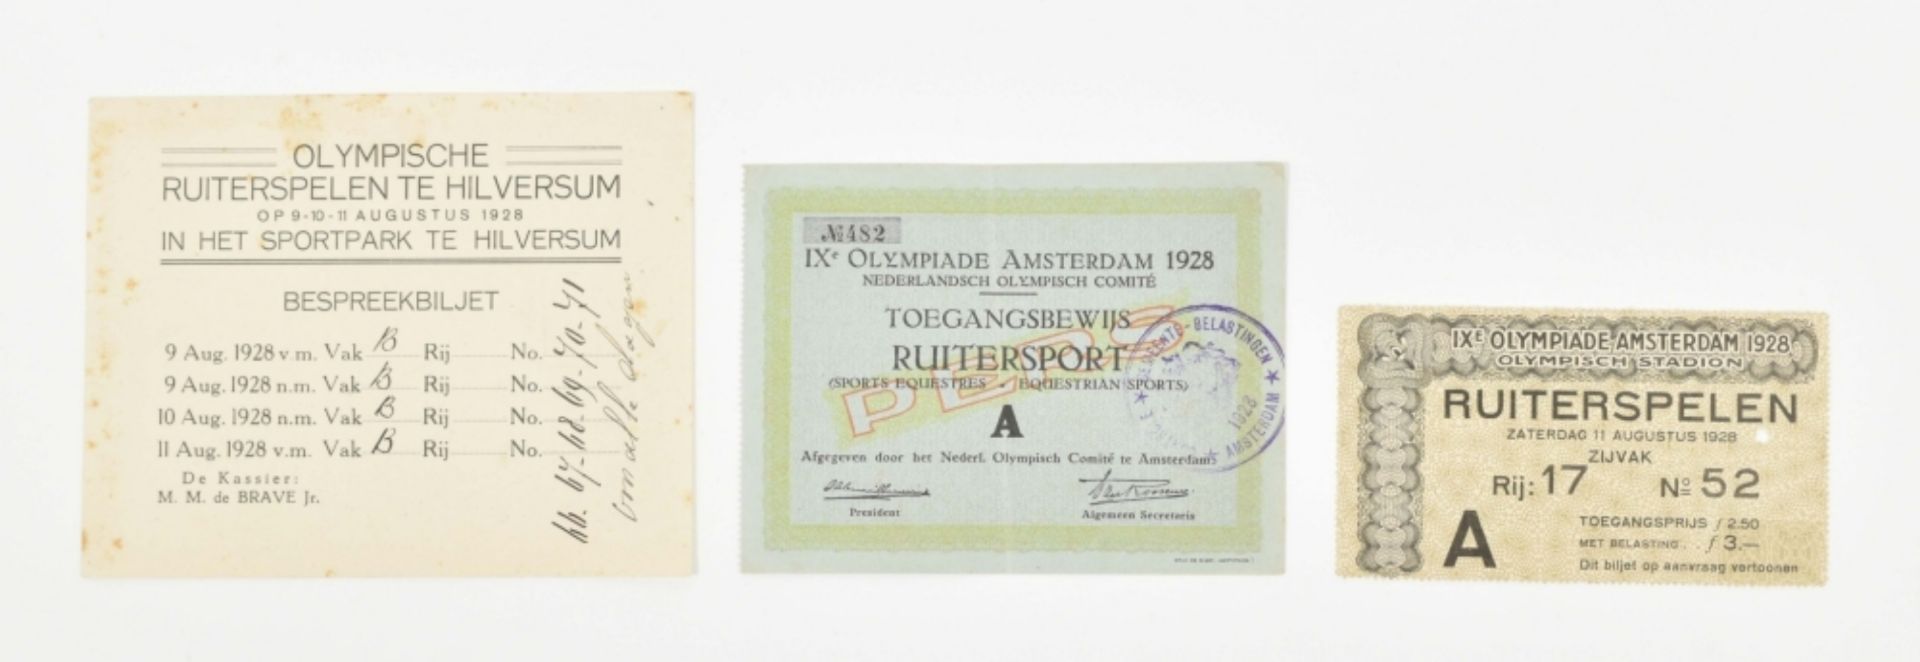 Three items: Olympische Ruiterspelen te Hilversum 1928